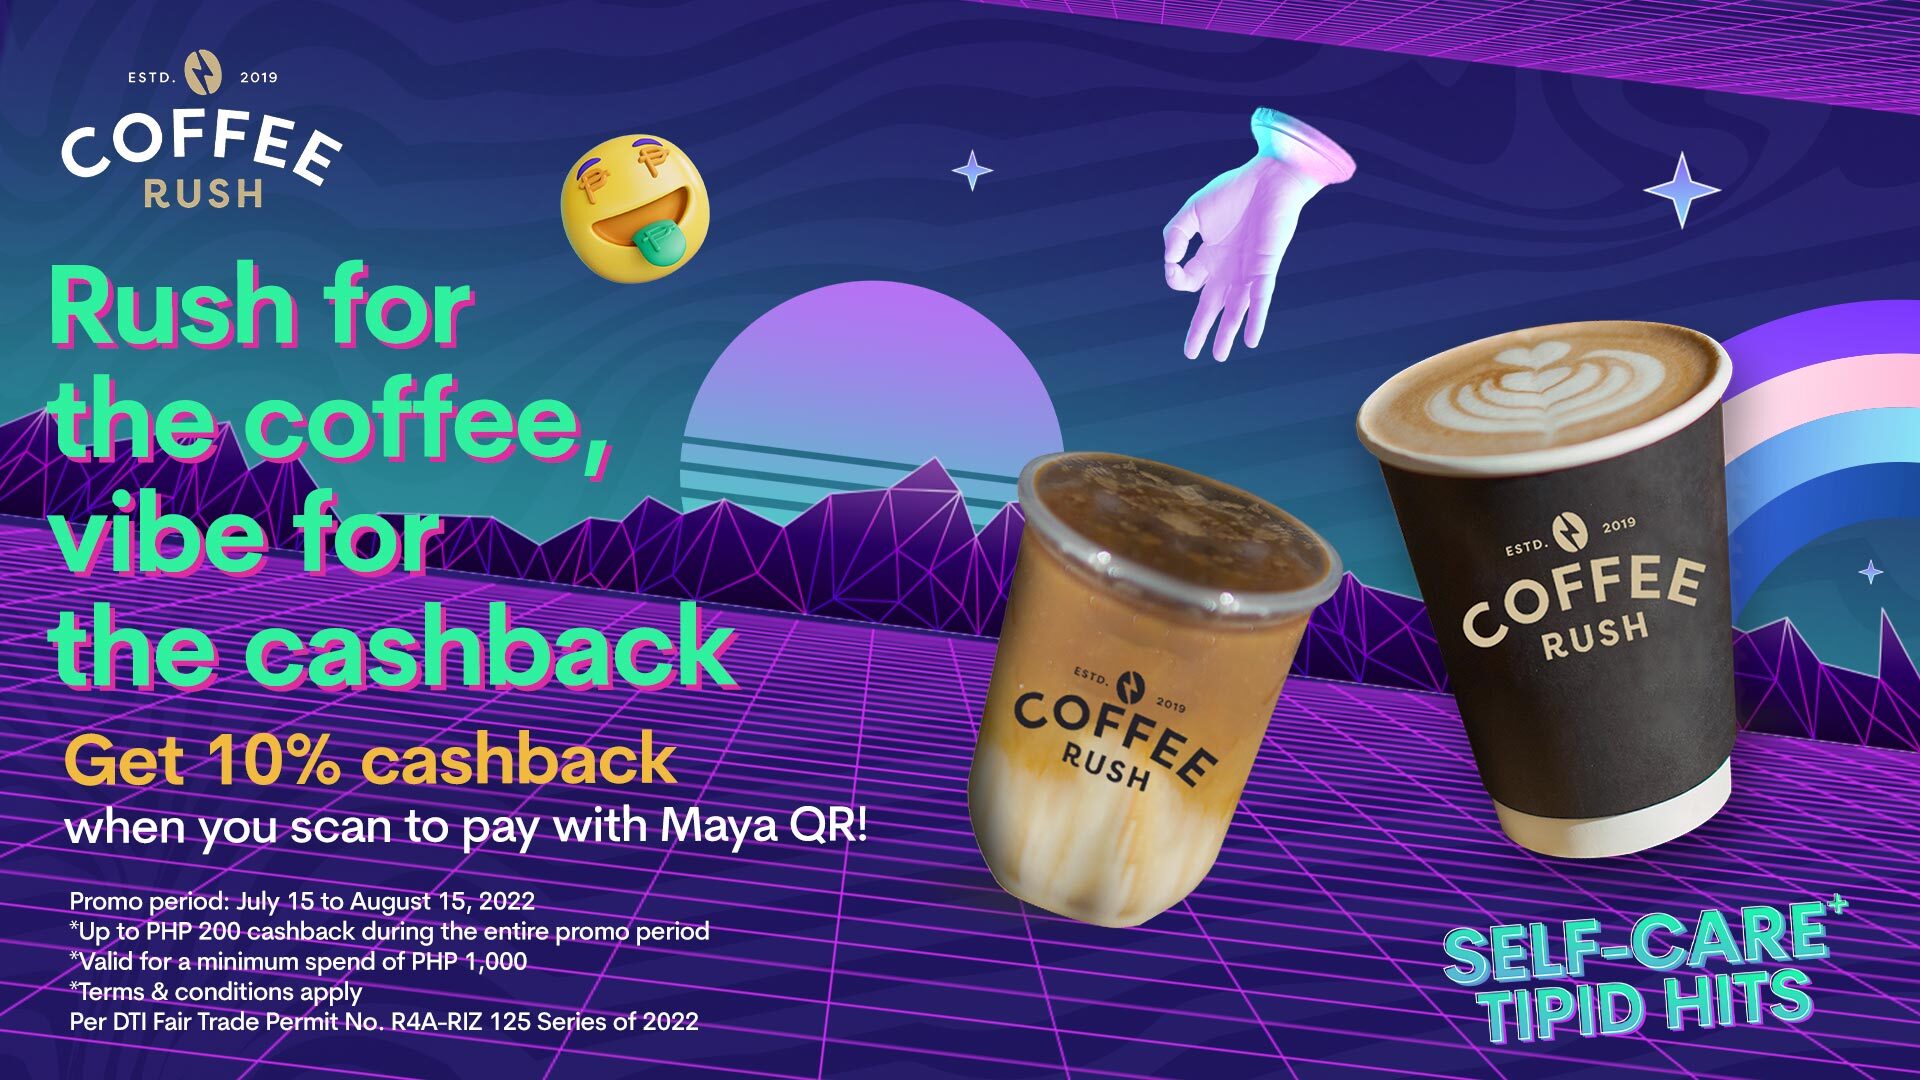 Pay with Maya QR to enjoy a 10% cashback for a minimum spend of PHP 1,000 at Coffee Rush Binangonan.